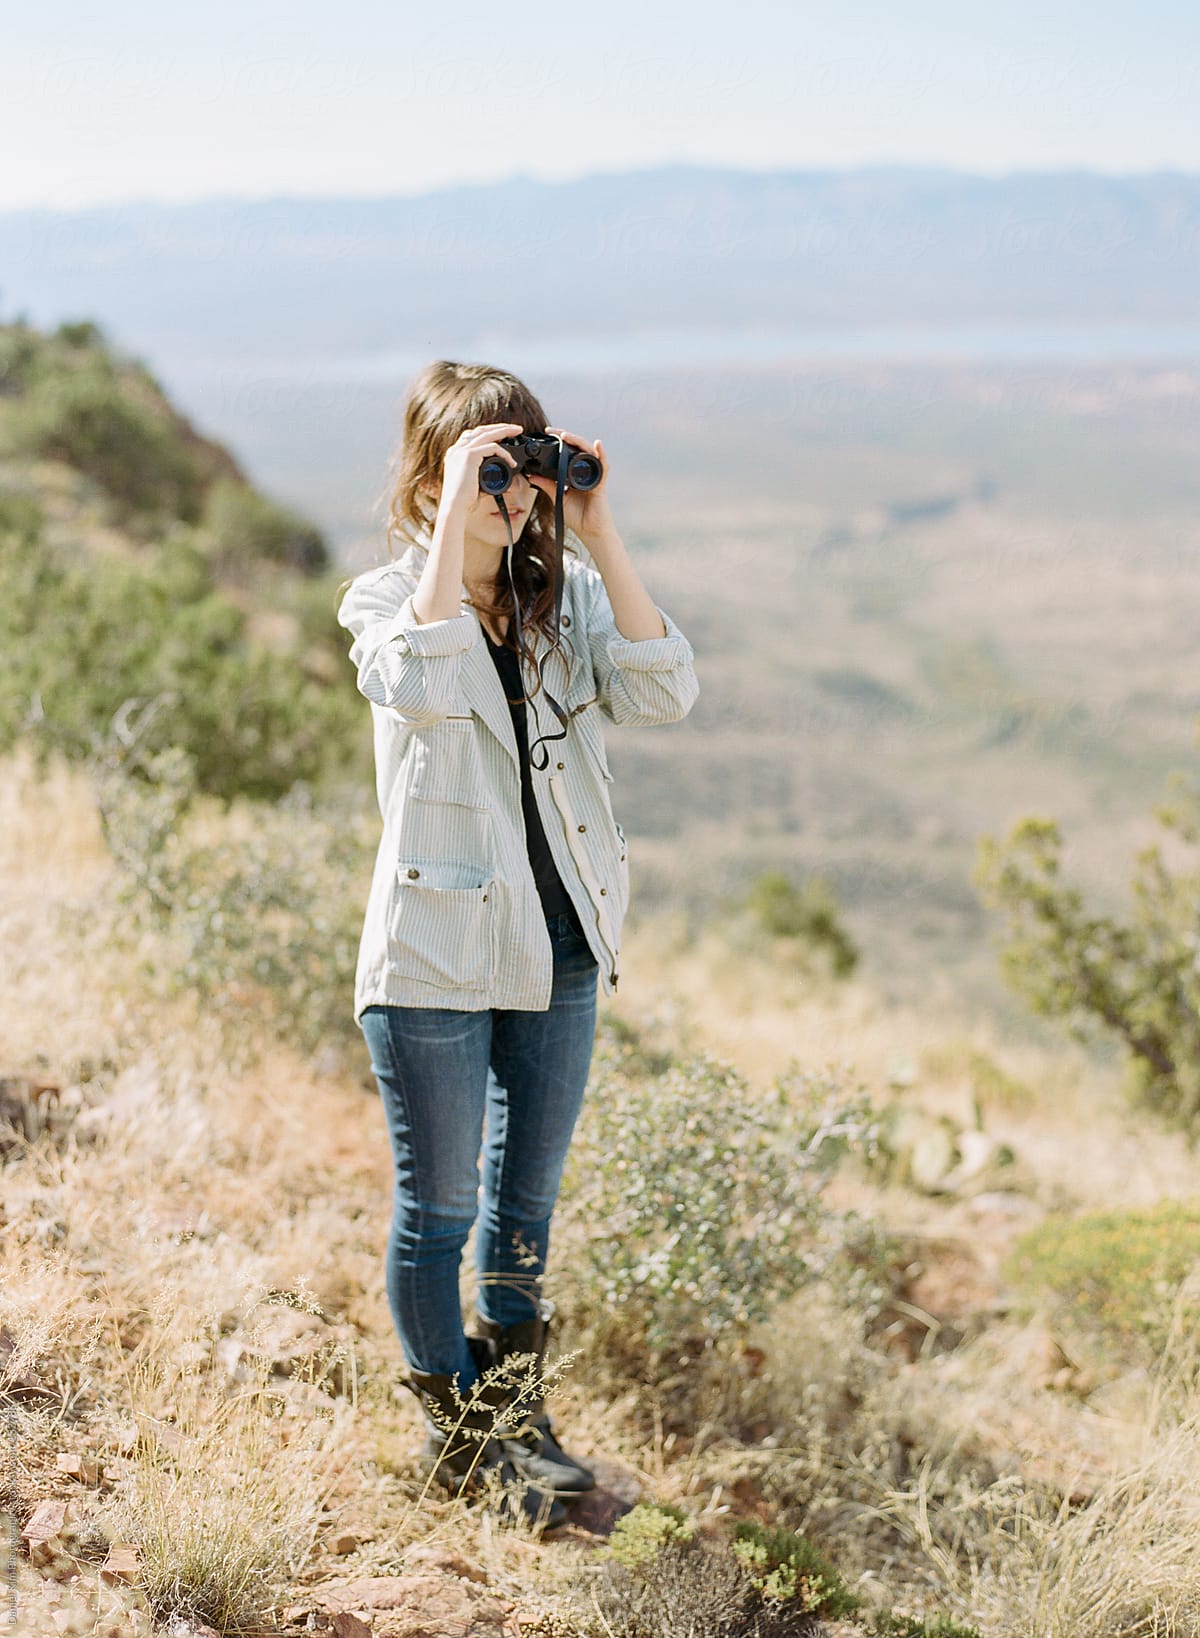 girl viewing with binoculars